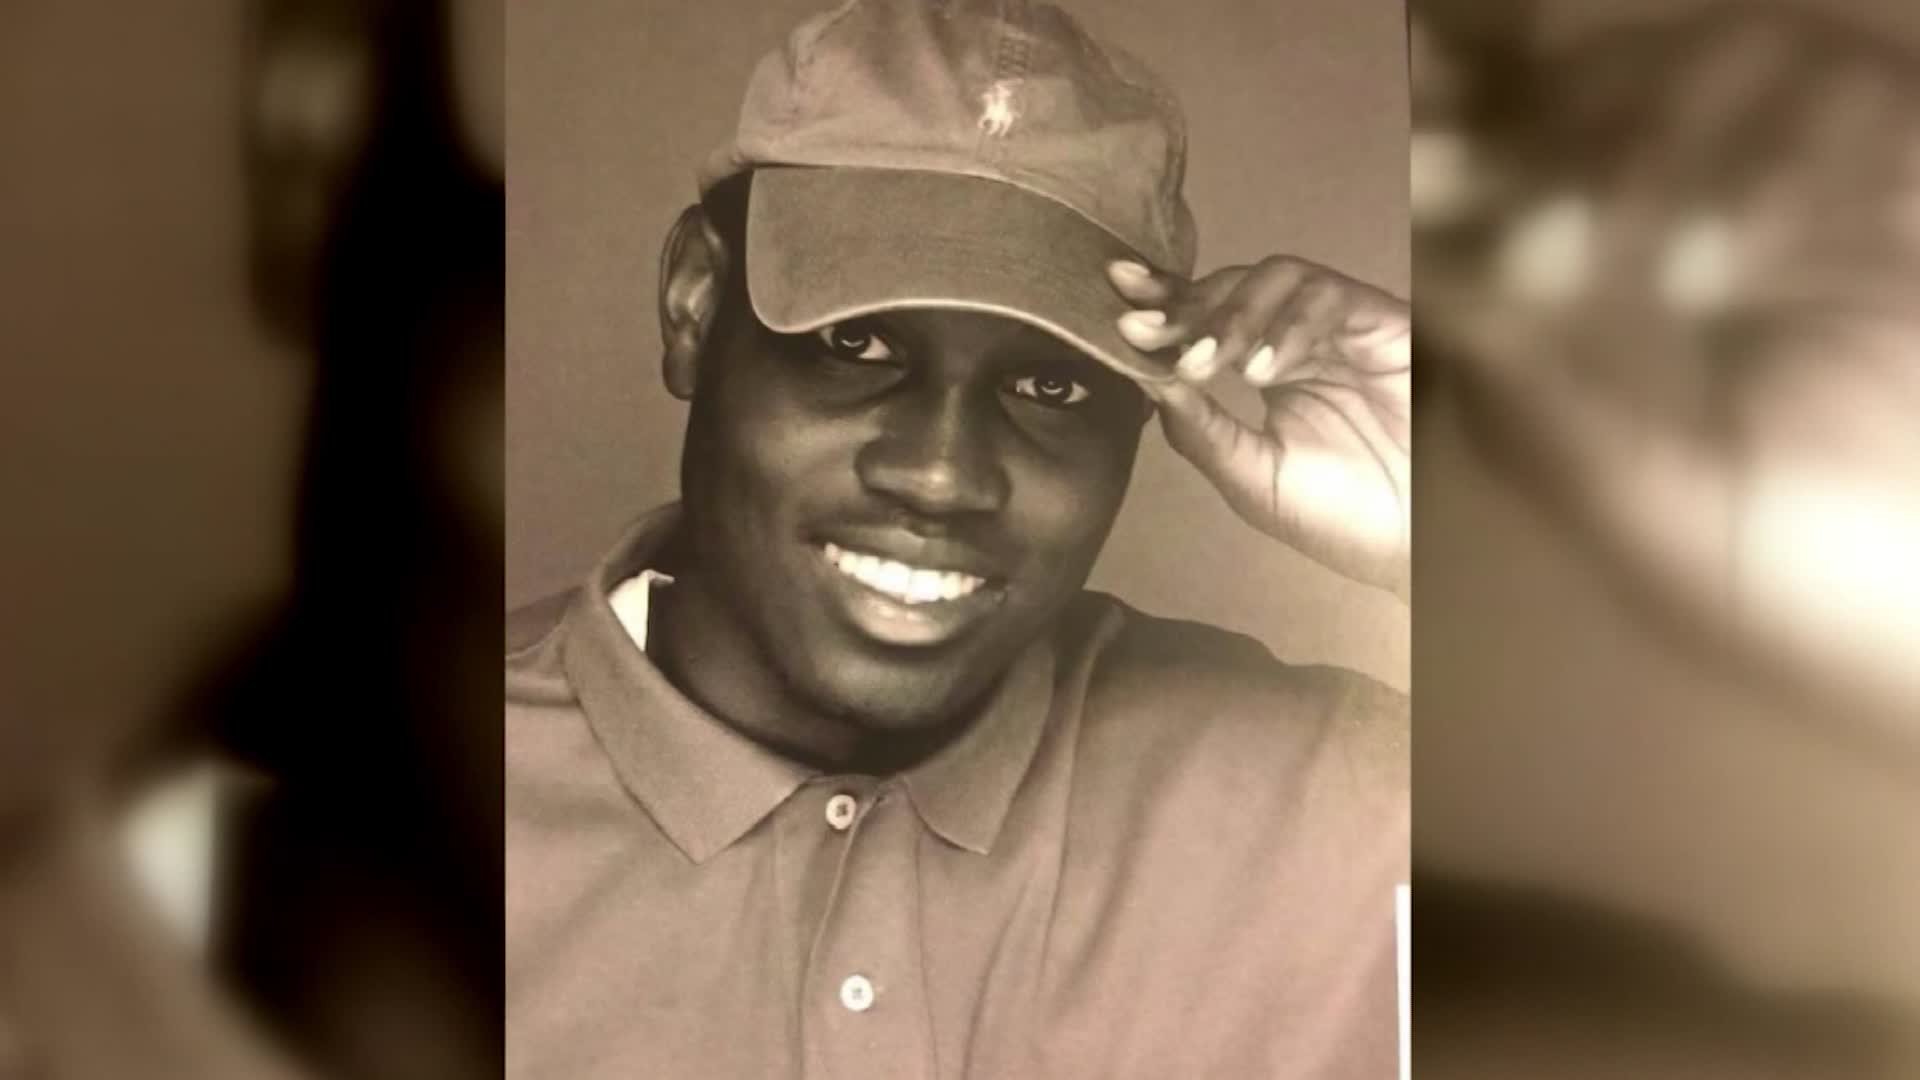 Ahmaud Arbery, 25, was killed February 23 while running through a neighborhood outside of Brunswick, Georgia.